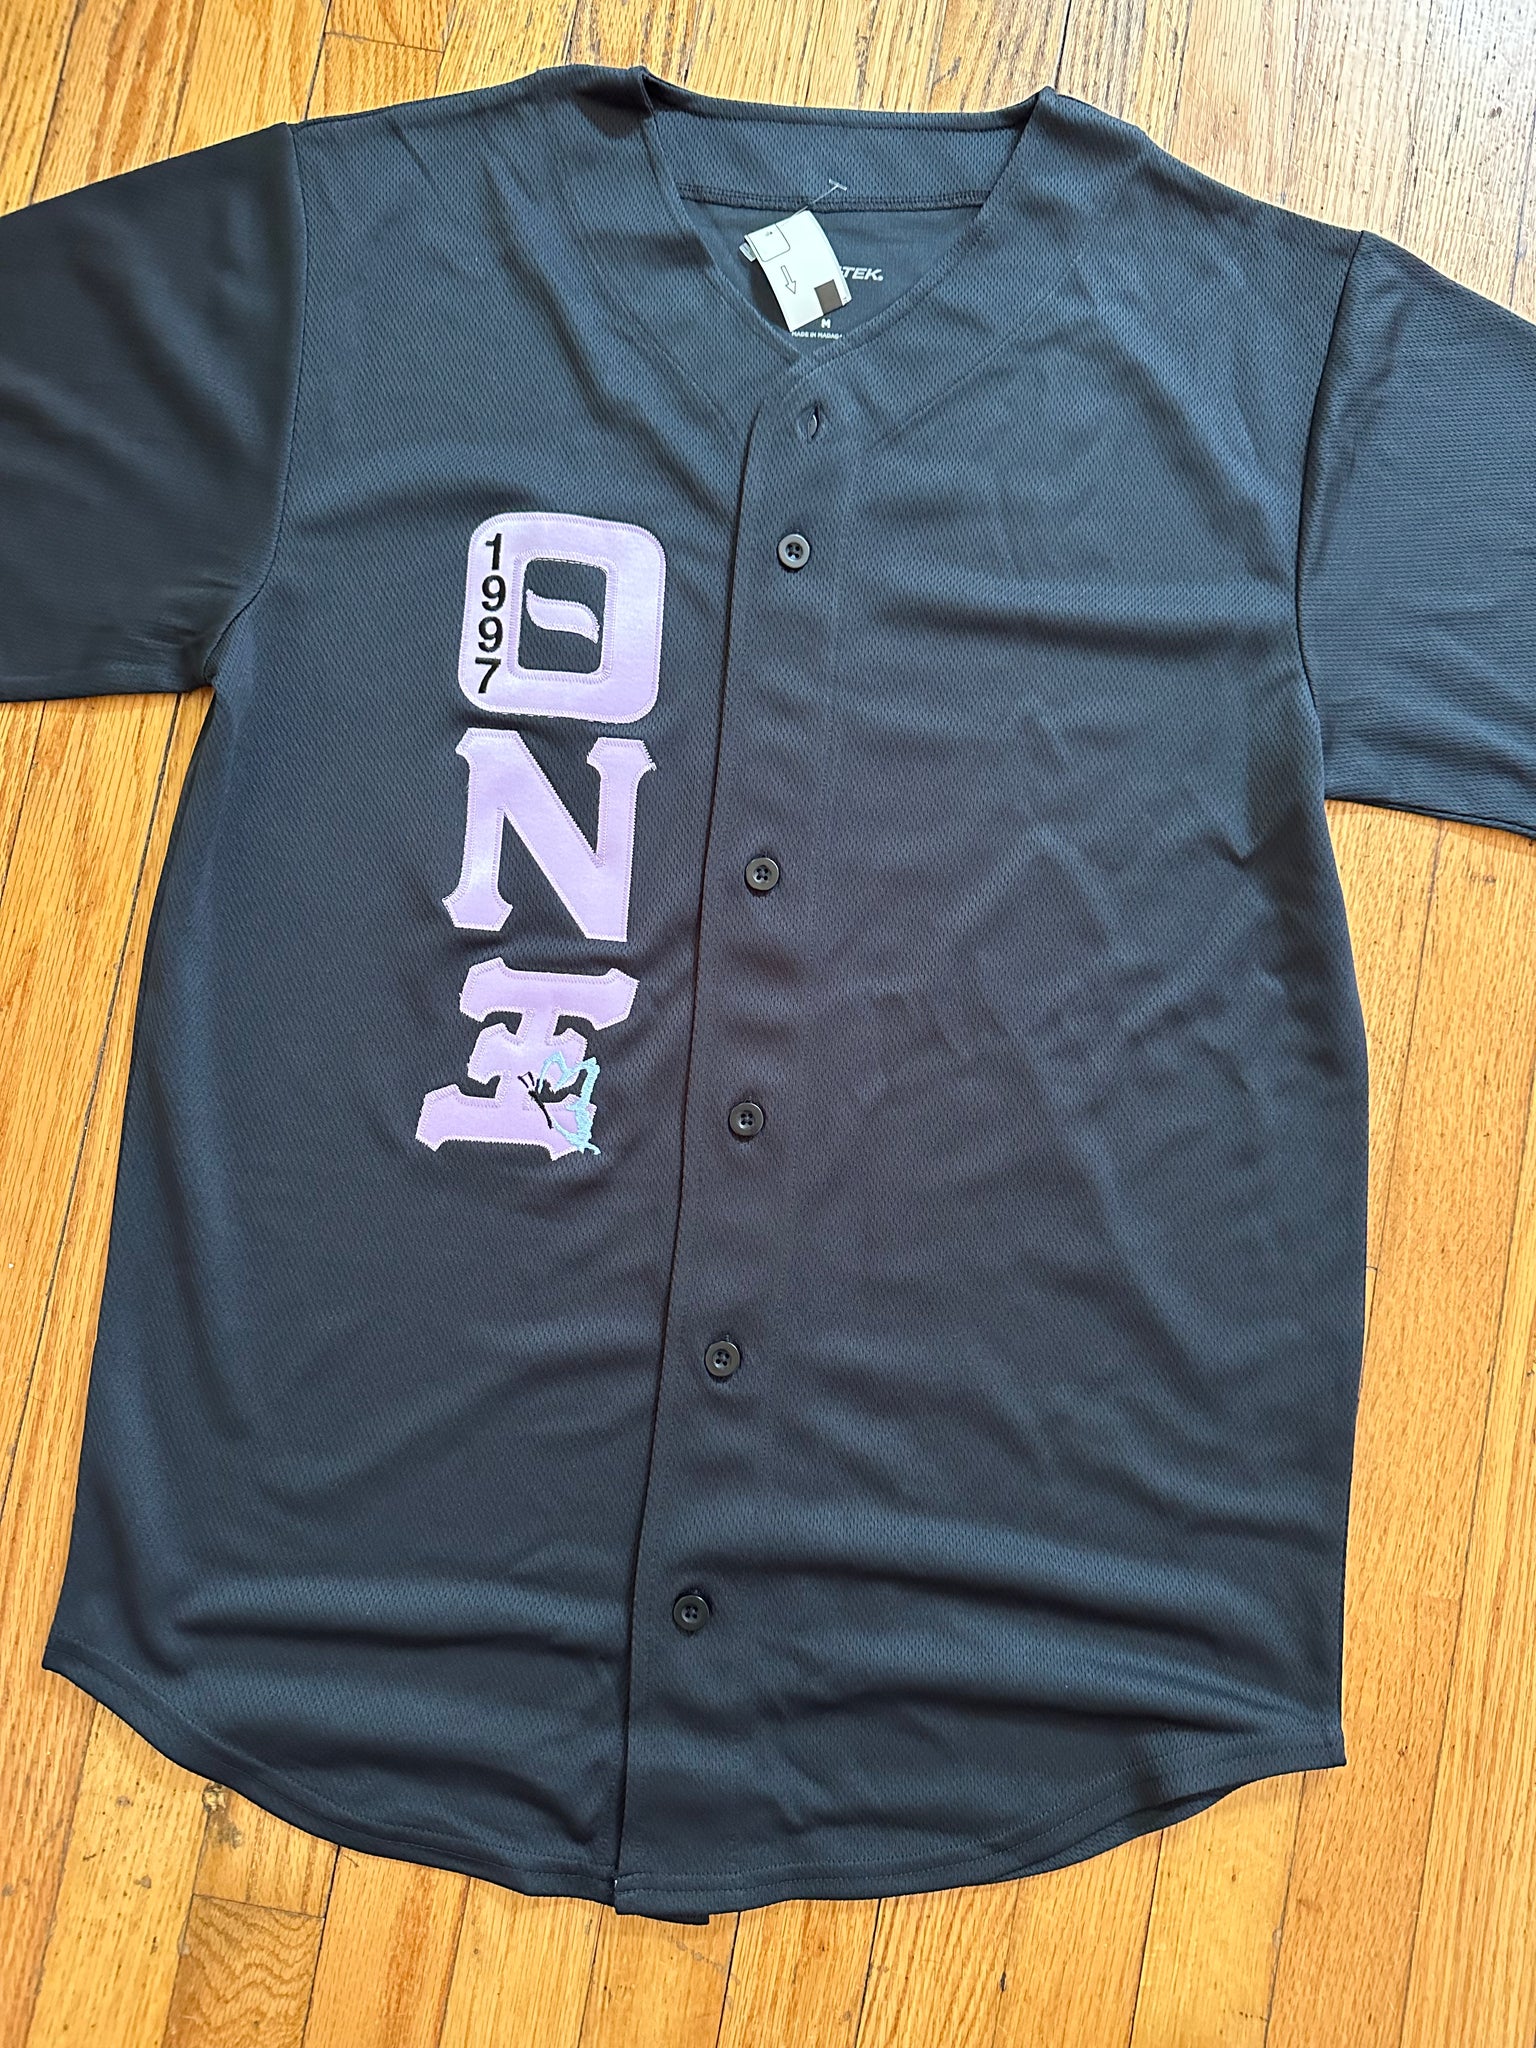 Theta Nu Xi - Full Button Baseball Jersey